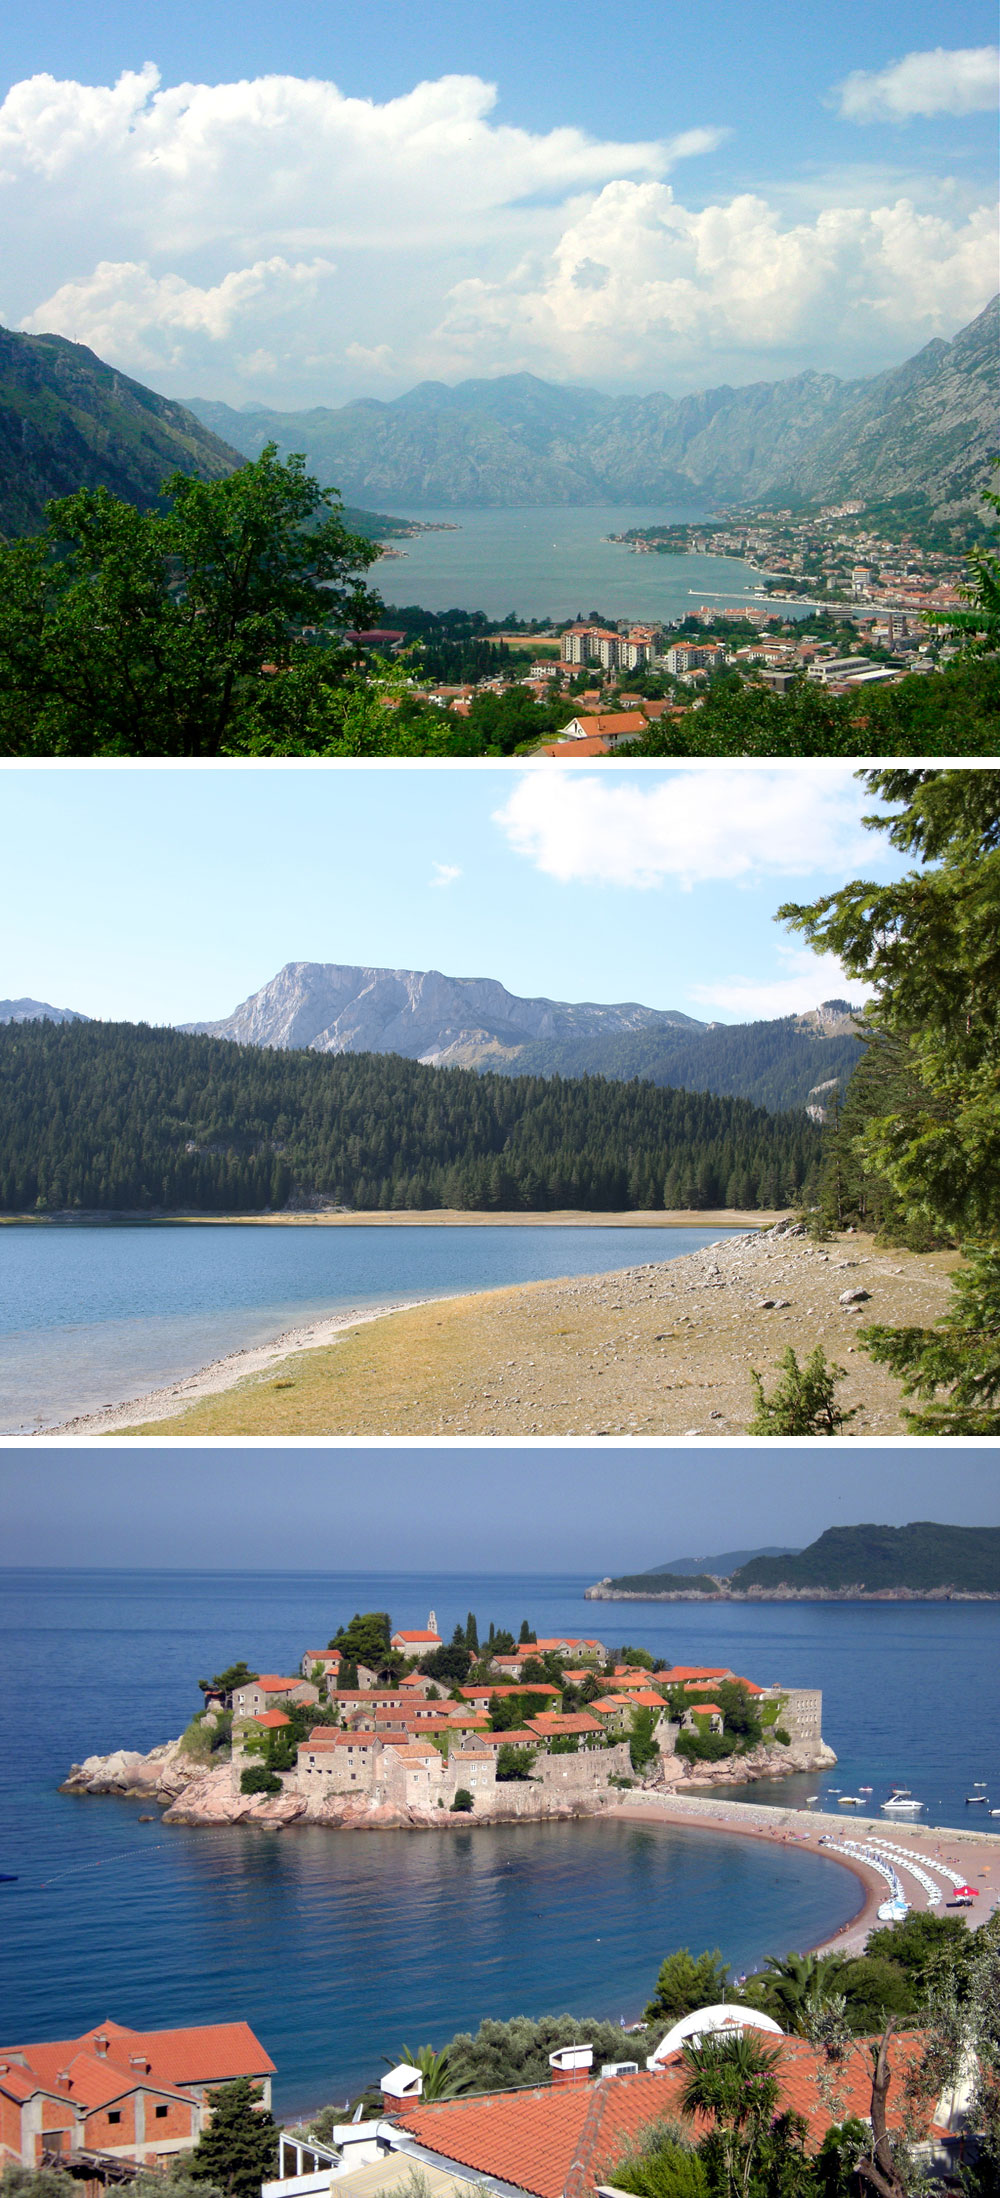 Fakta: Montenegros landskap kännetecknas av en kustlinje med berg